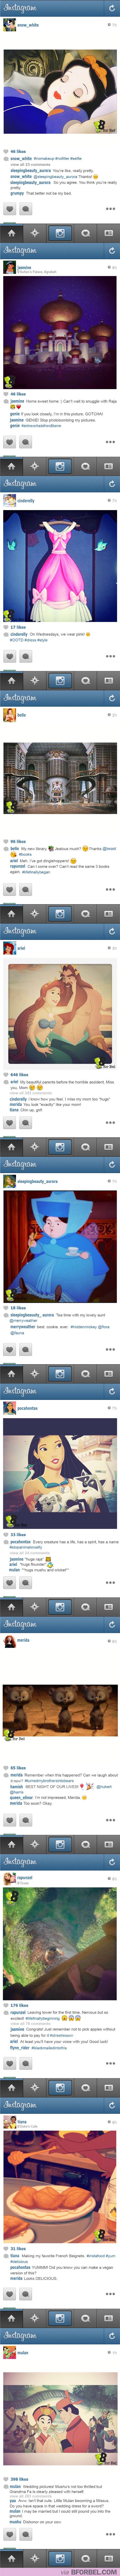 Instagram-disney-princesas